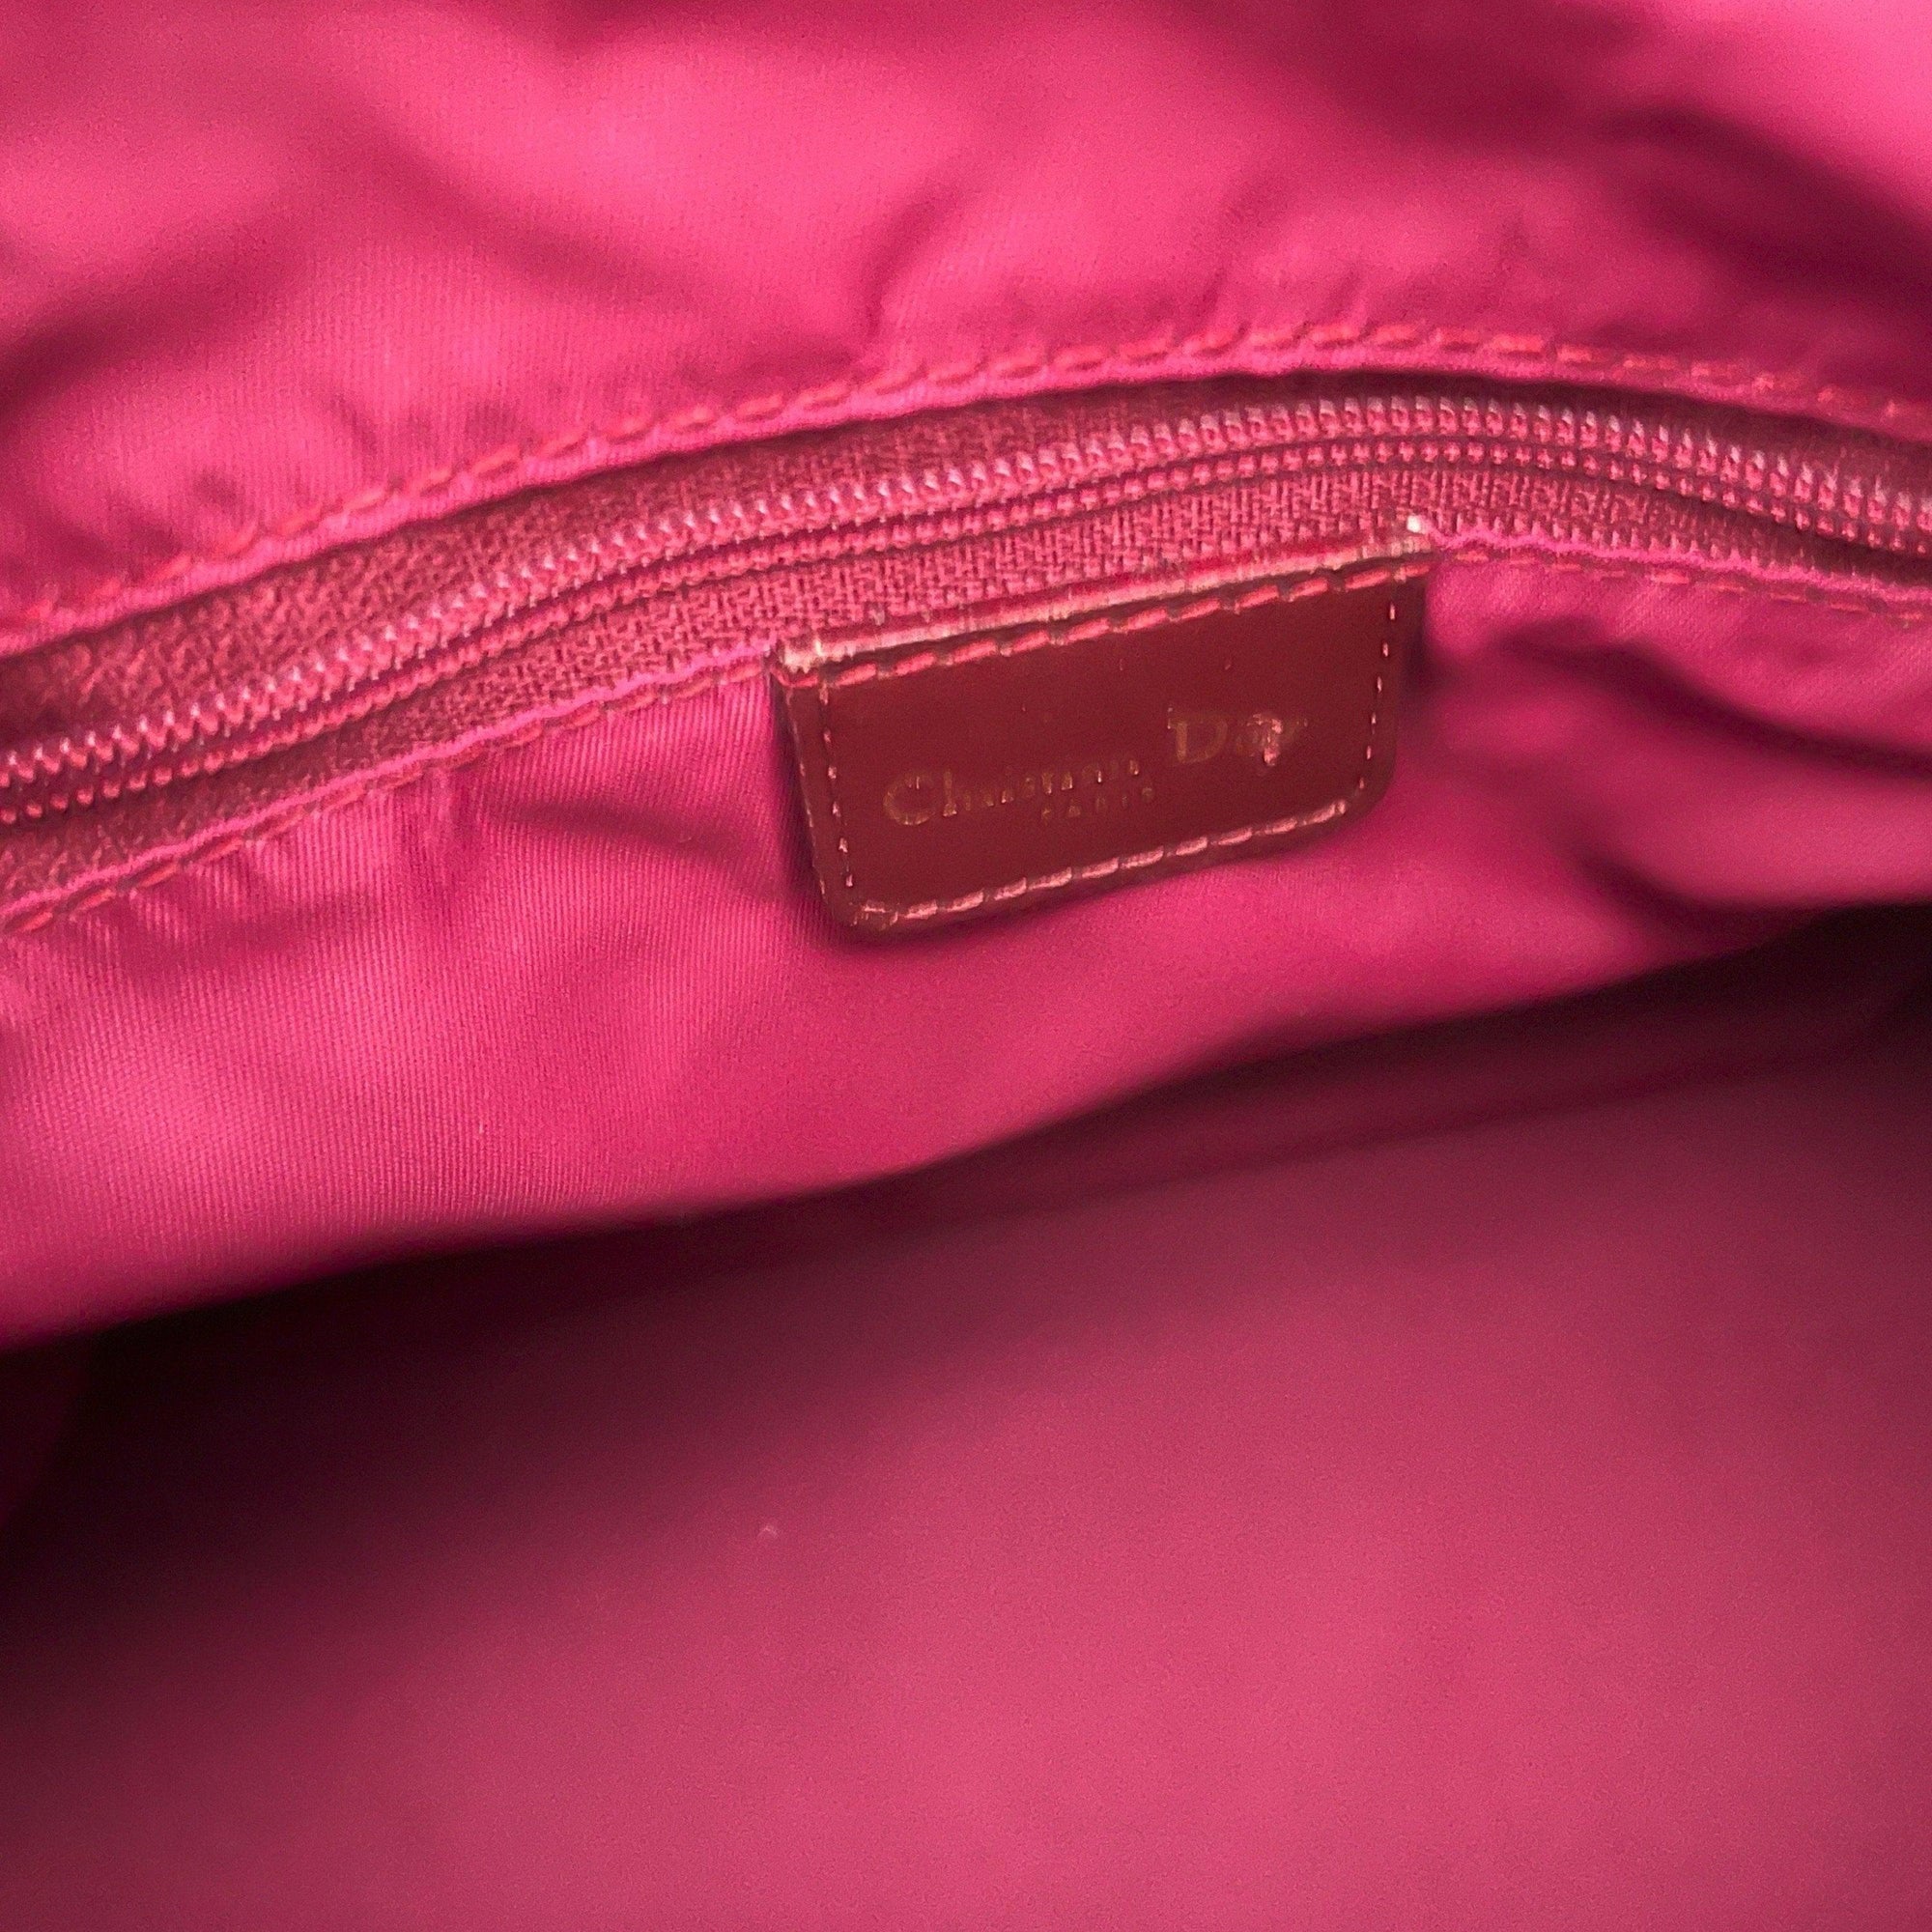 Dior Burgundy Monogram Mini Boston Bag - Handbags